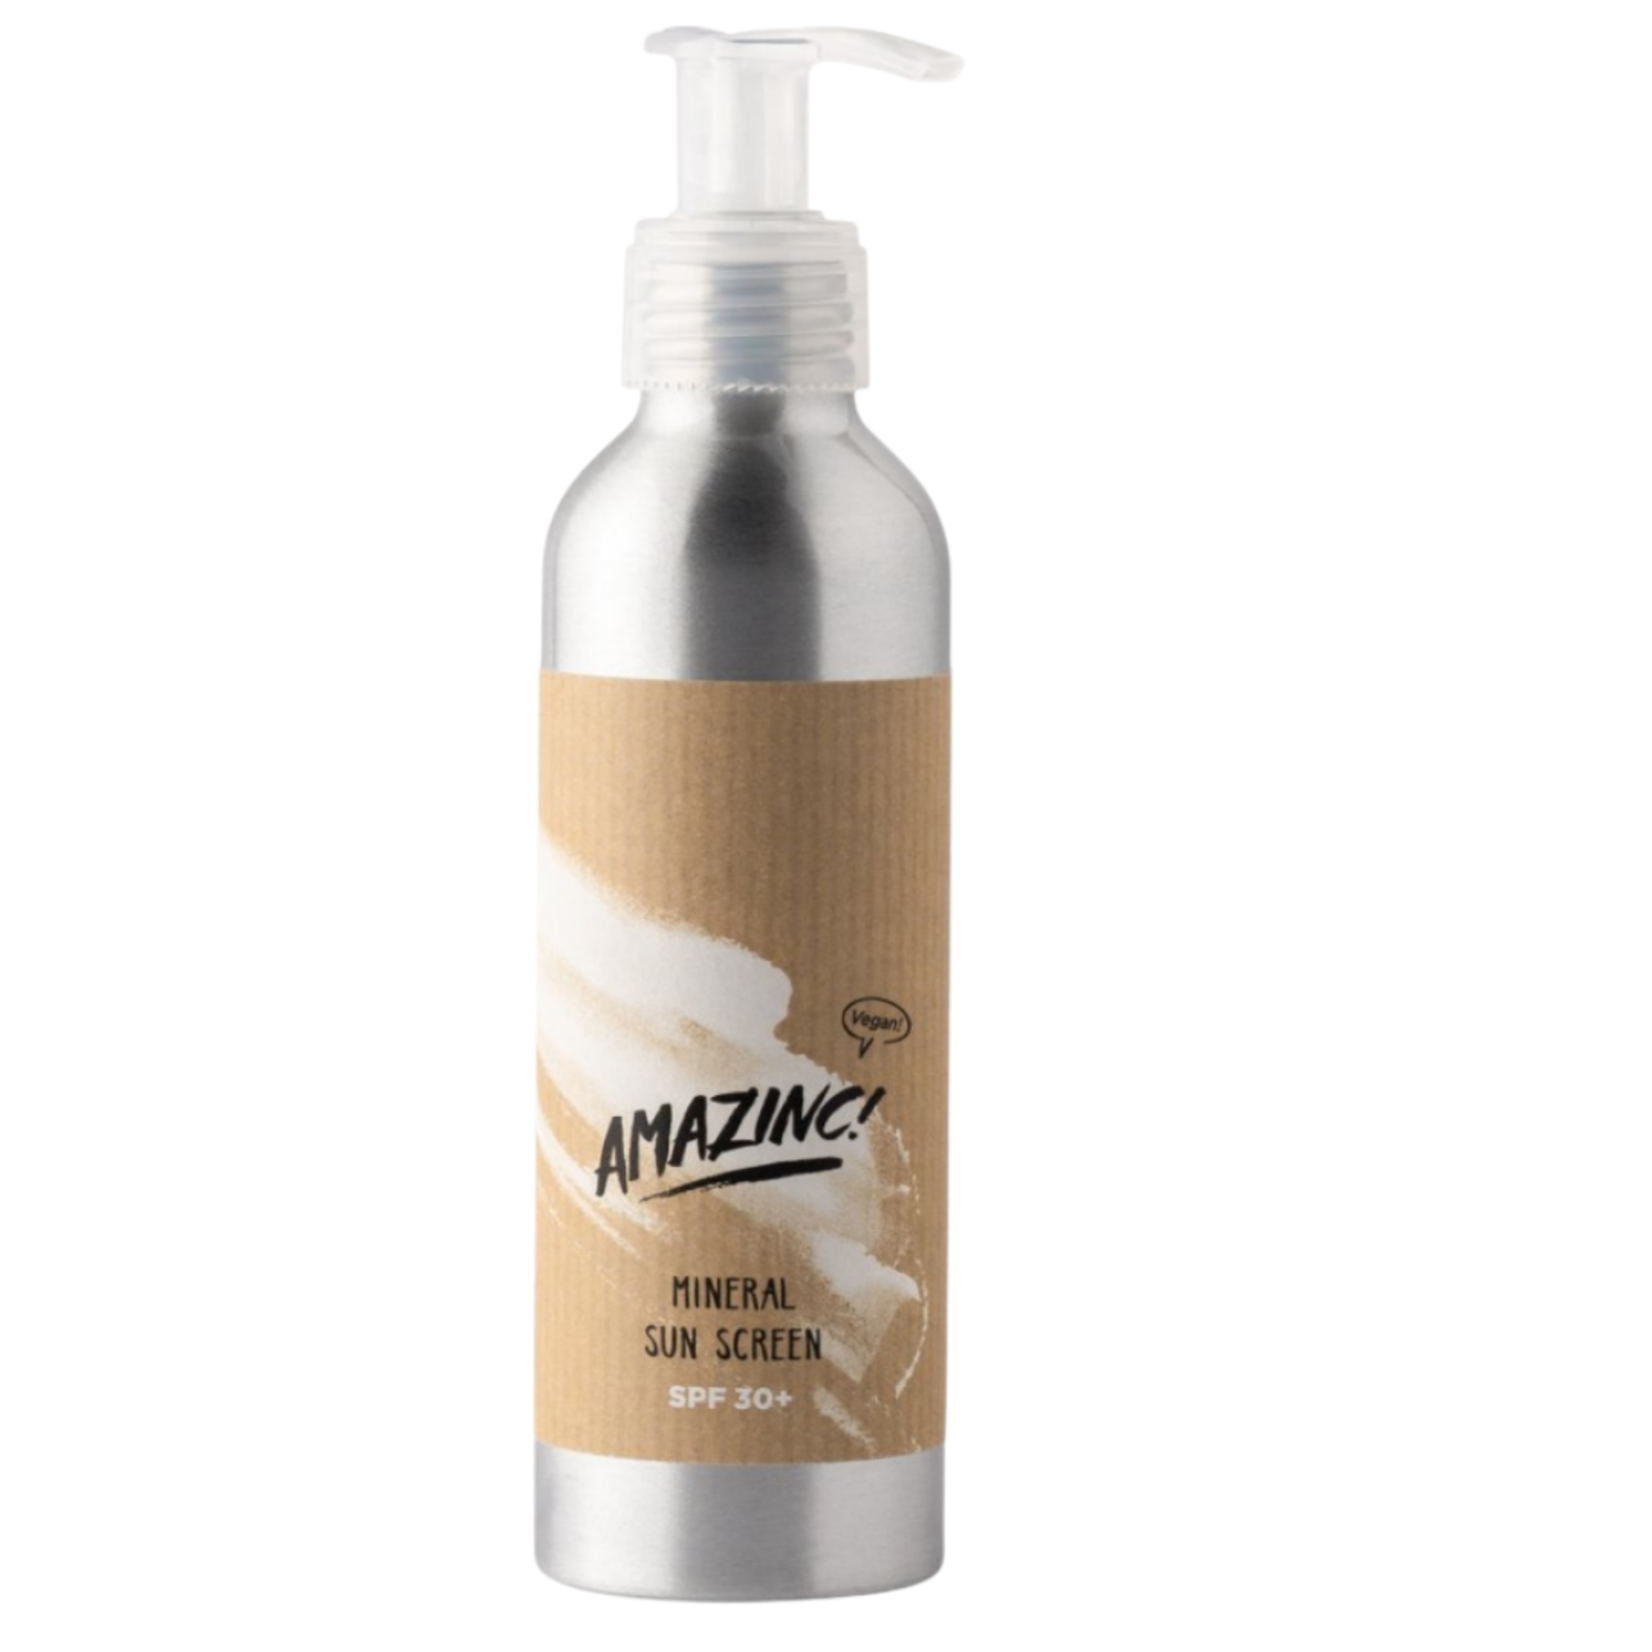 Amazinc! Mineral Sunscreen SPF30 with applicator